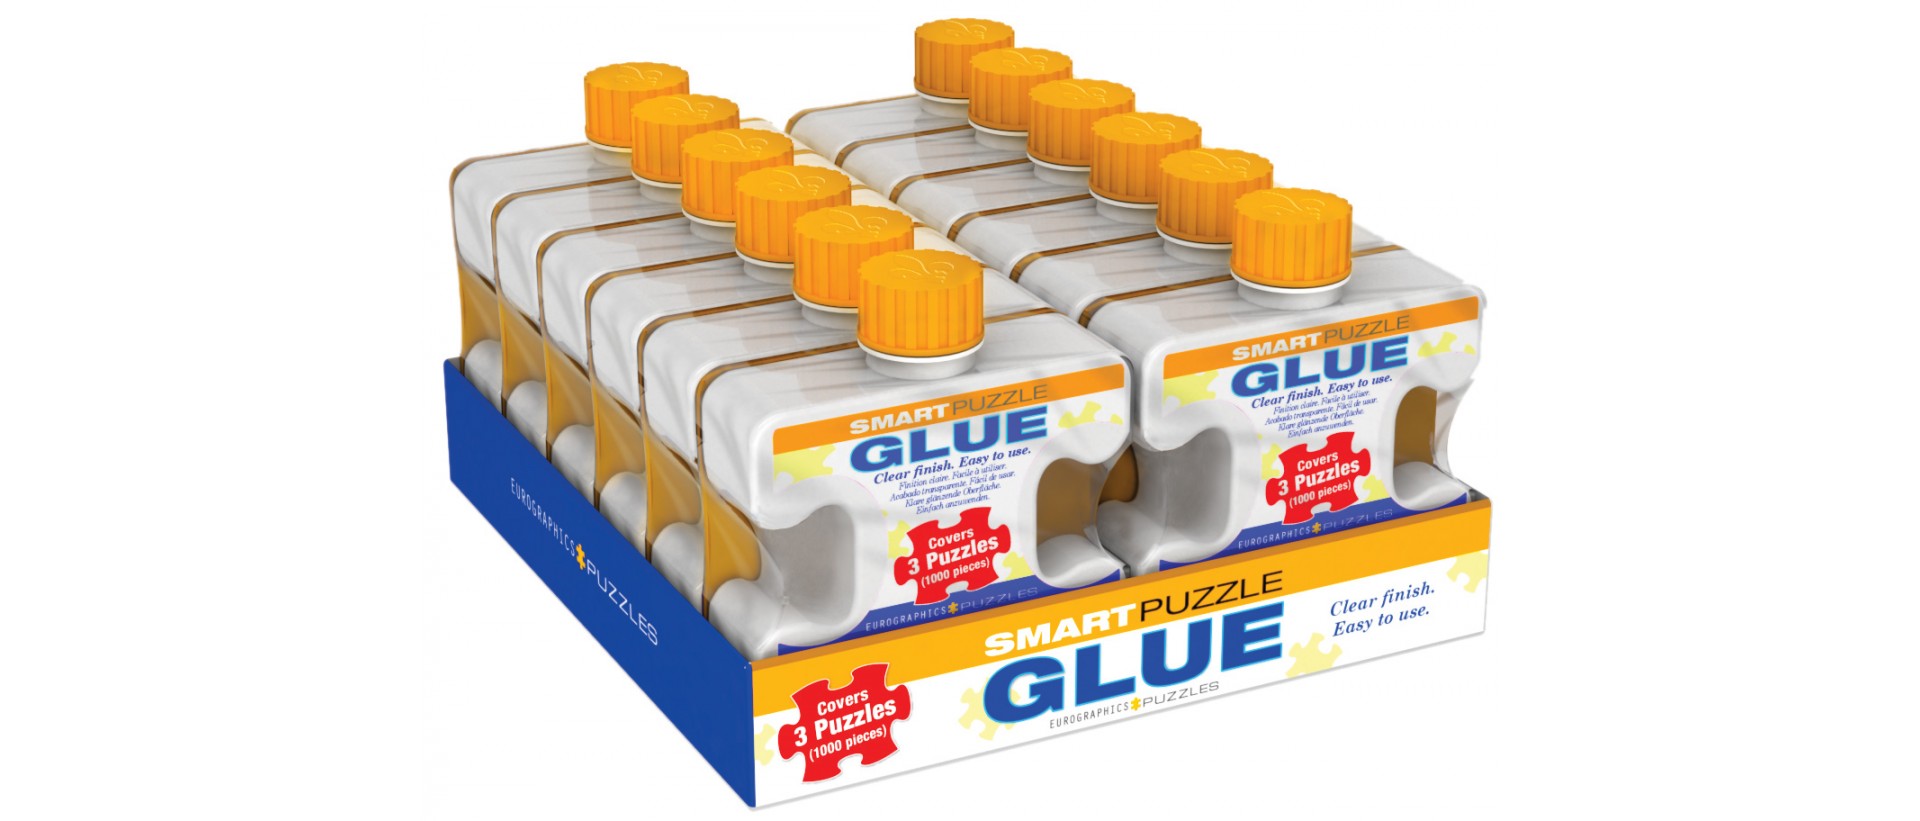 Smart Puzzle Glue (12 glue bottles) - Eurographics 8901-0572